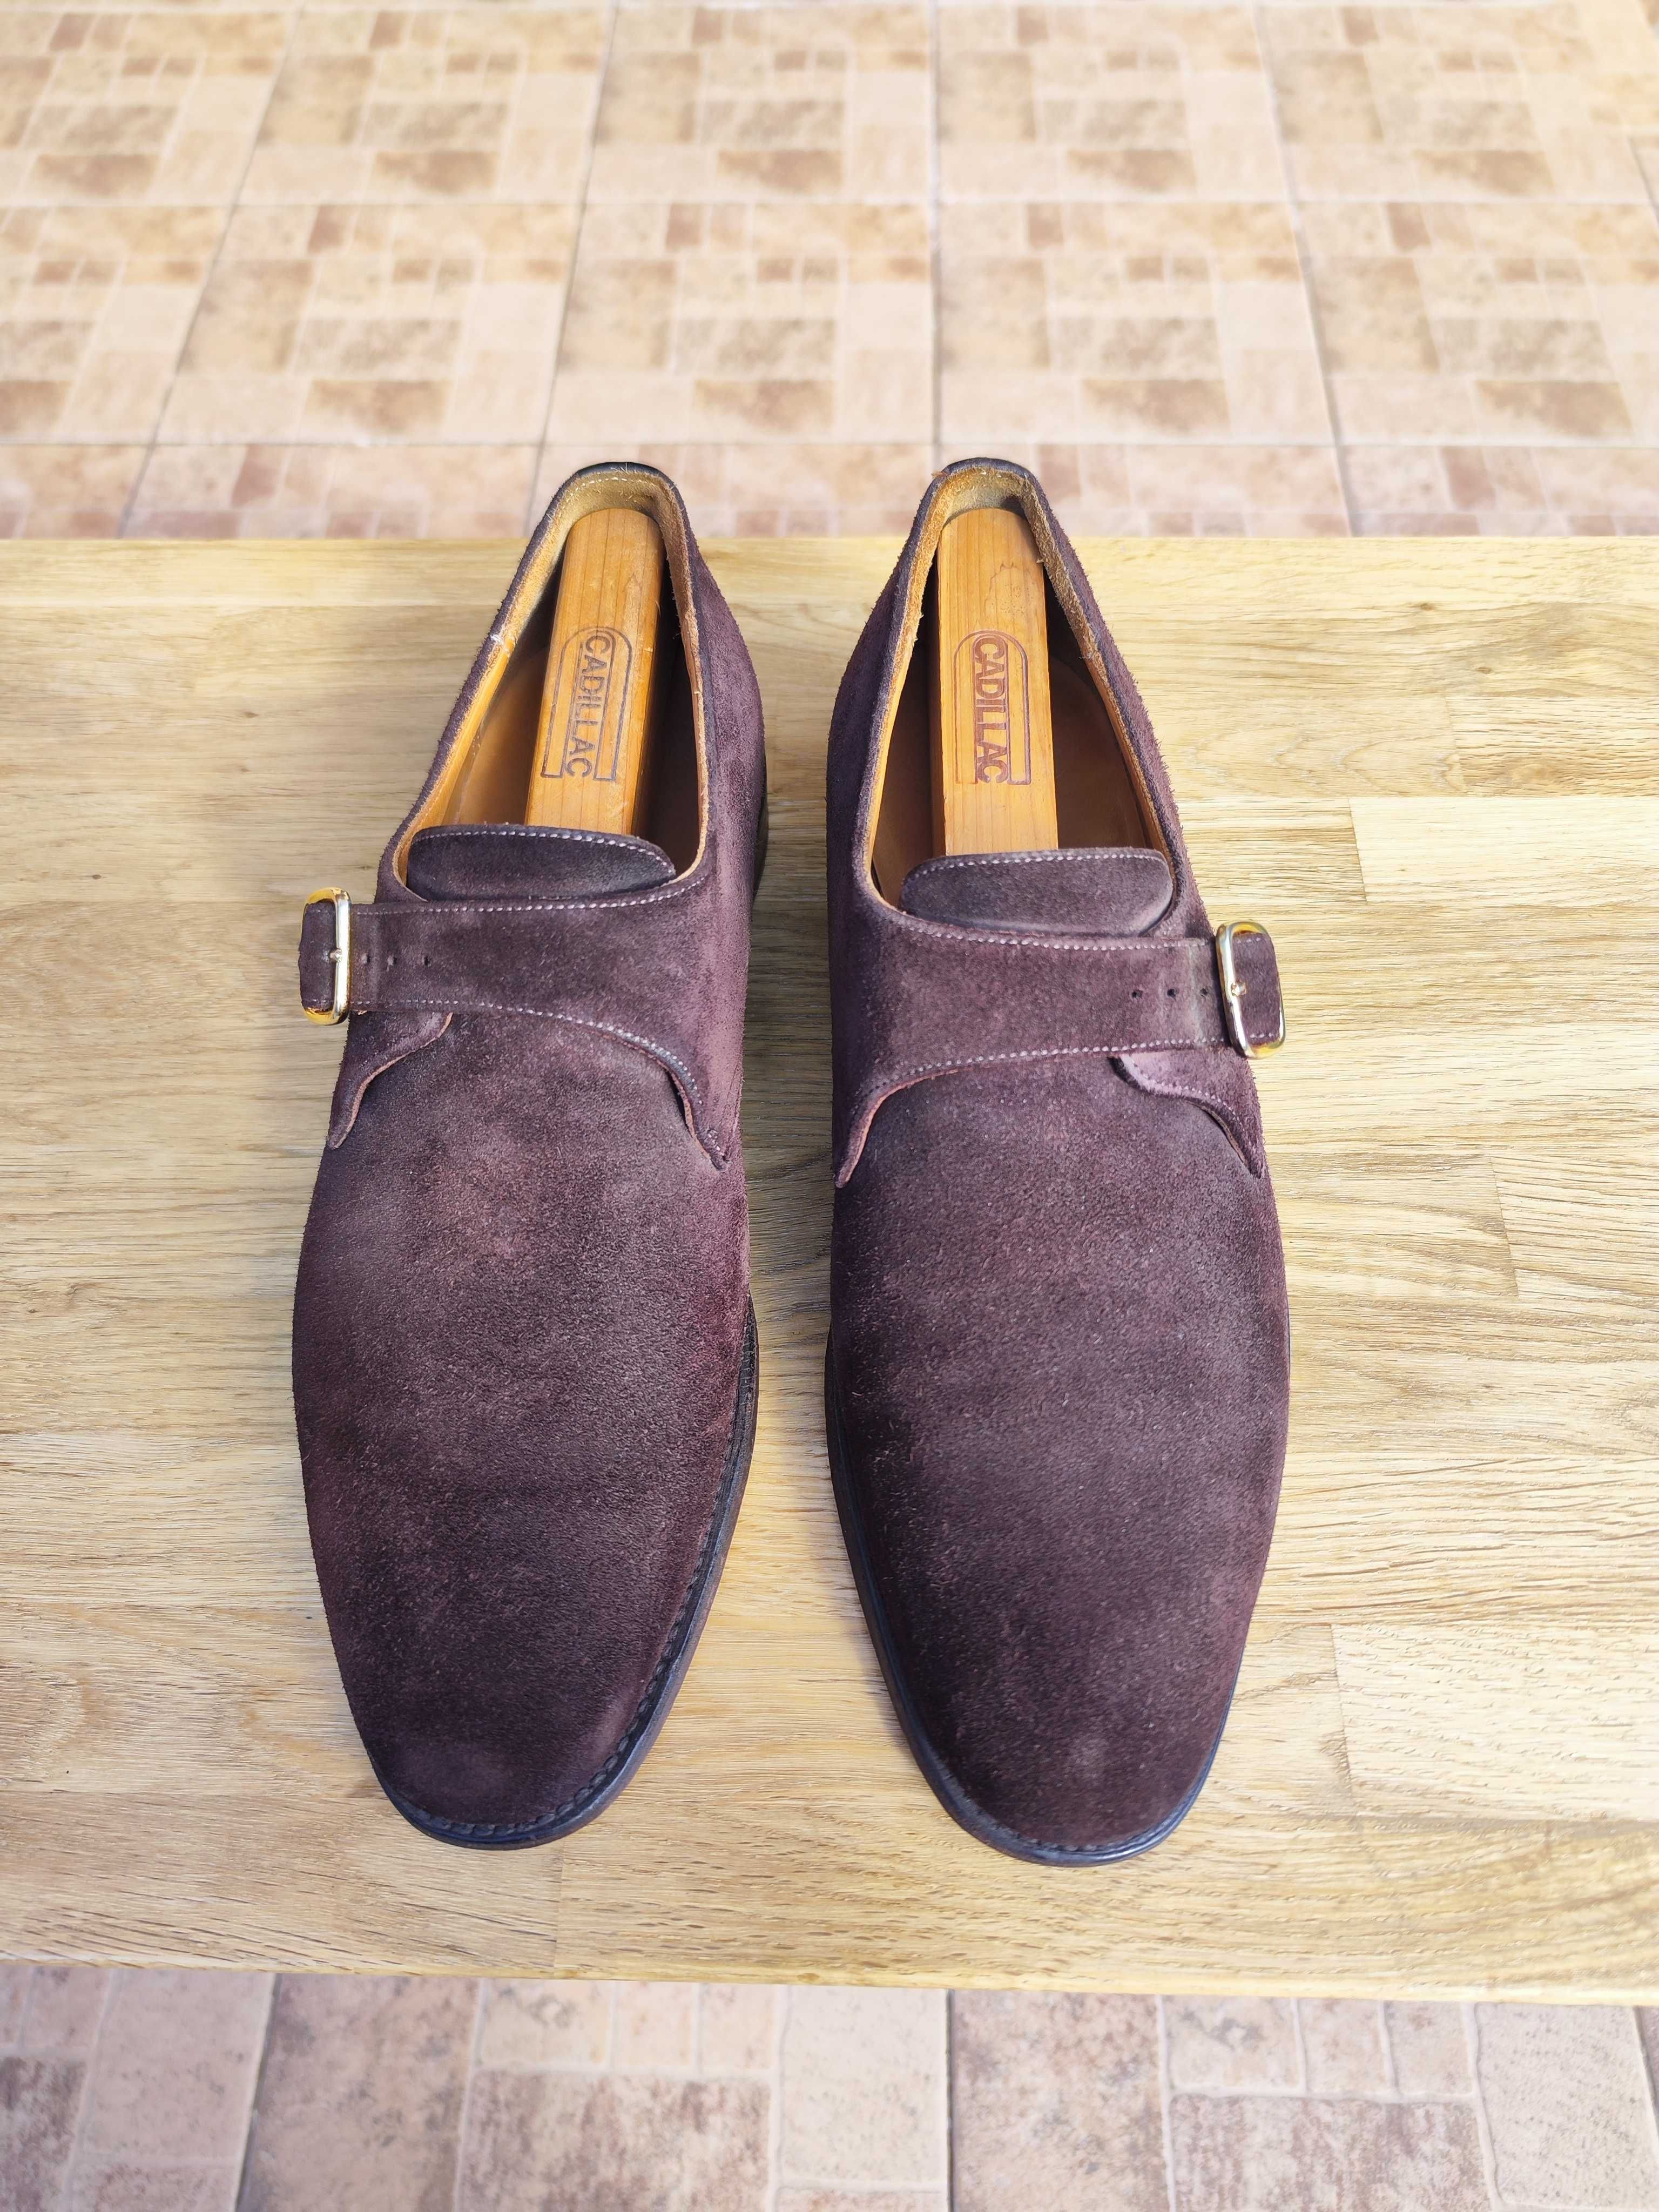 Pantofi de ocazie lux CHURCH's Made in England (Single Monk Strap) mar